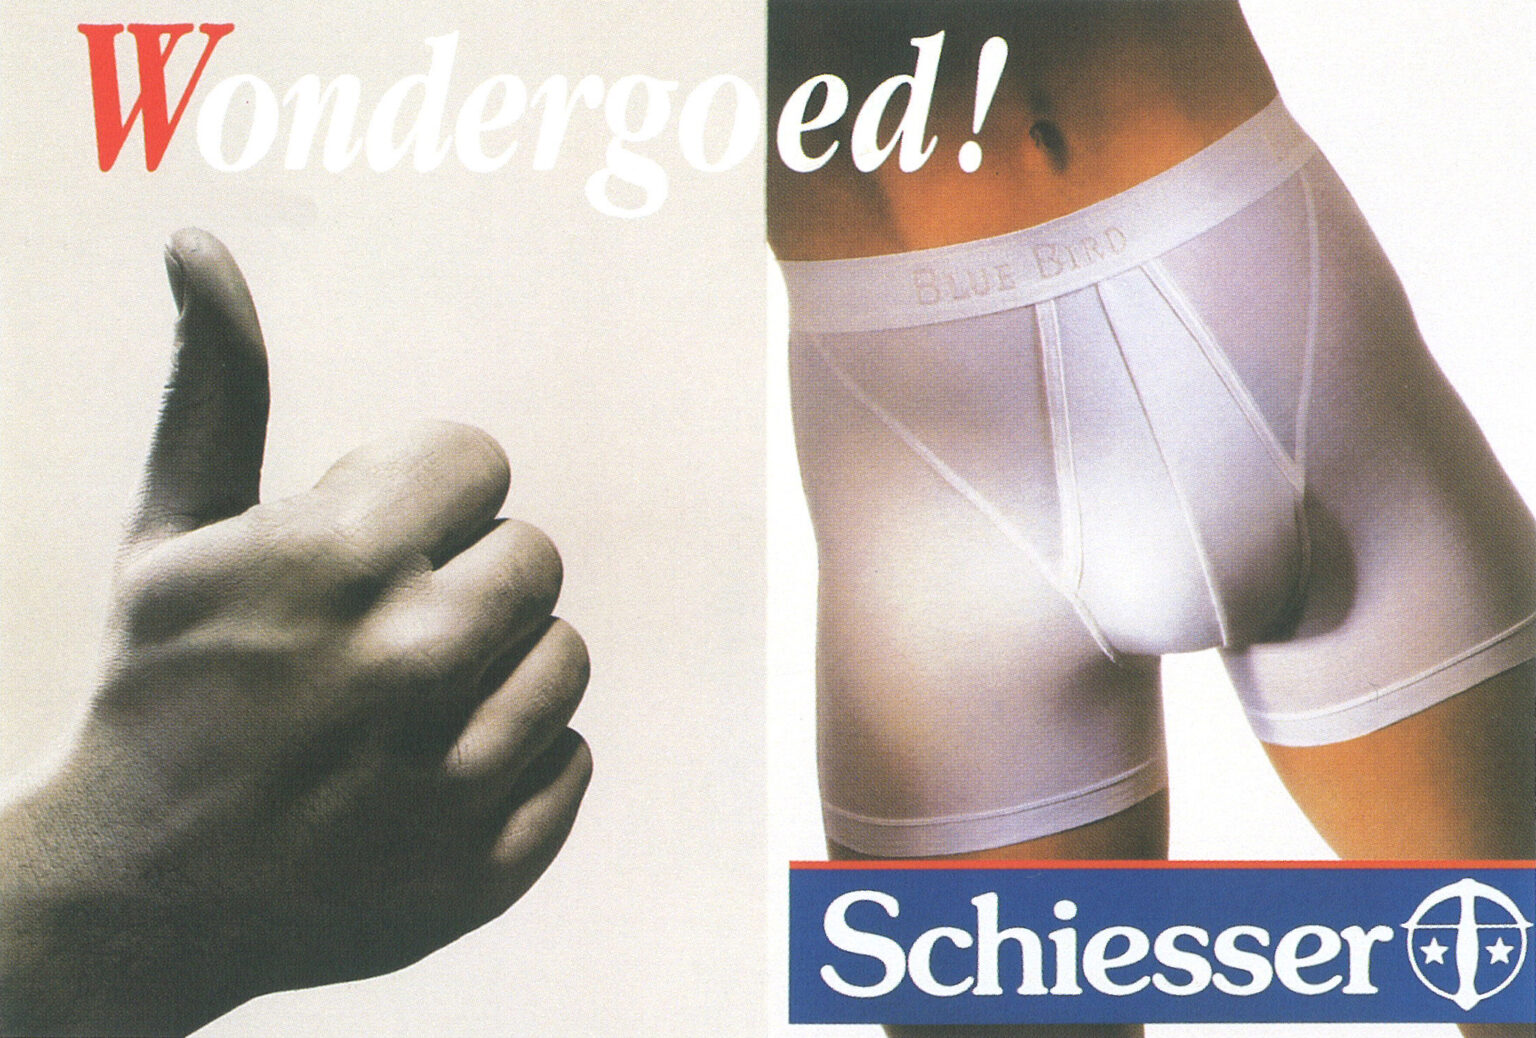 Schiesser campaign by Vandekerckhove & Devos